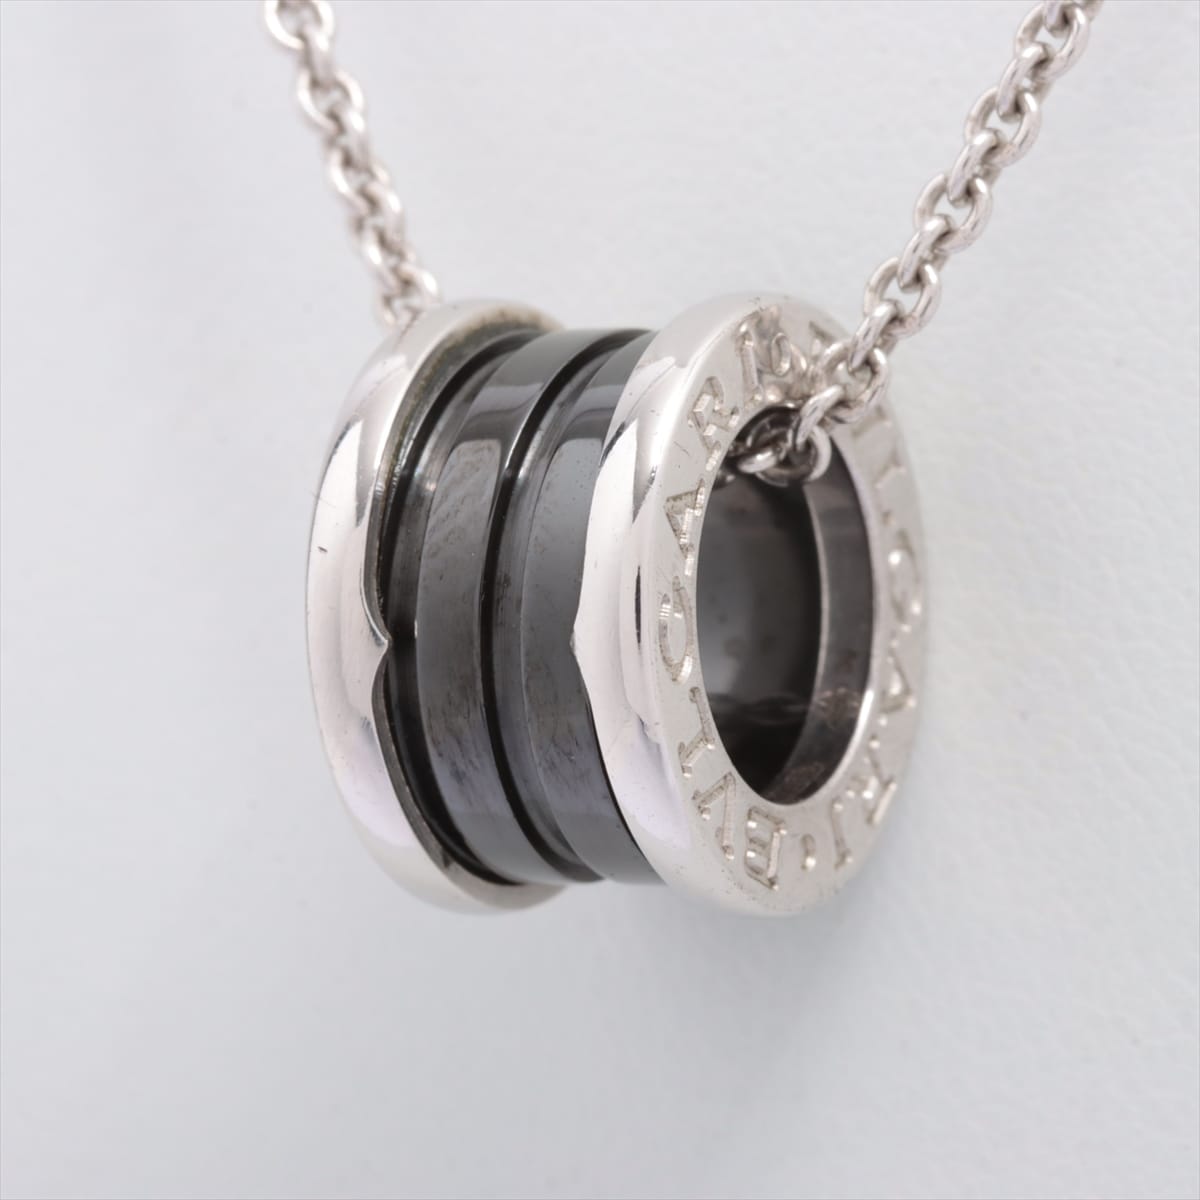 Bvlgari B.Zero 1 Save the Children Charity Necklace 925 x black ceramic 9.4g Black × Silver